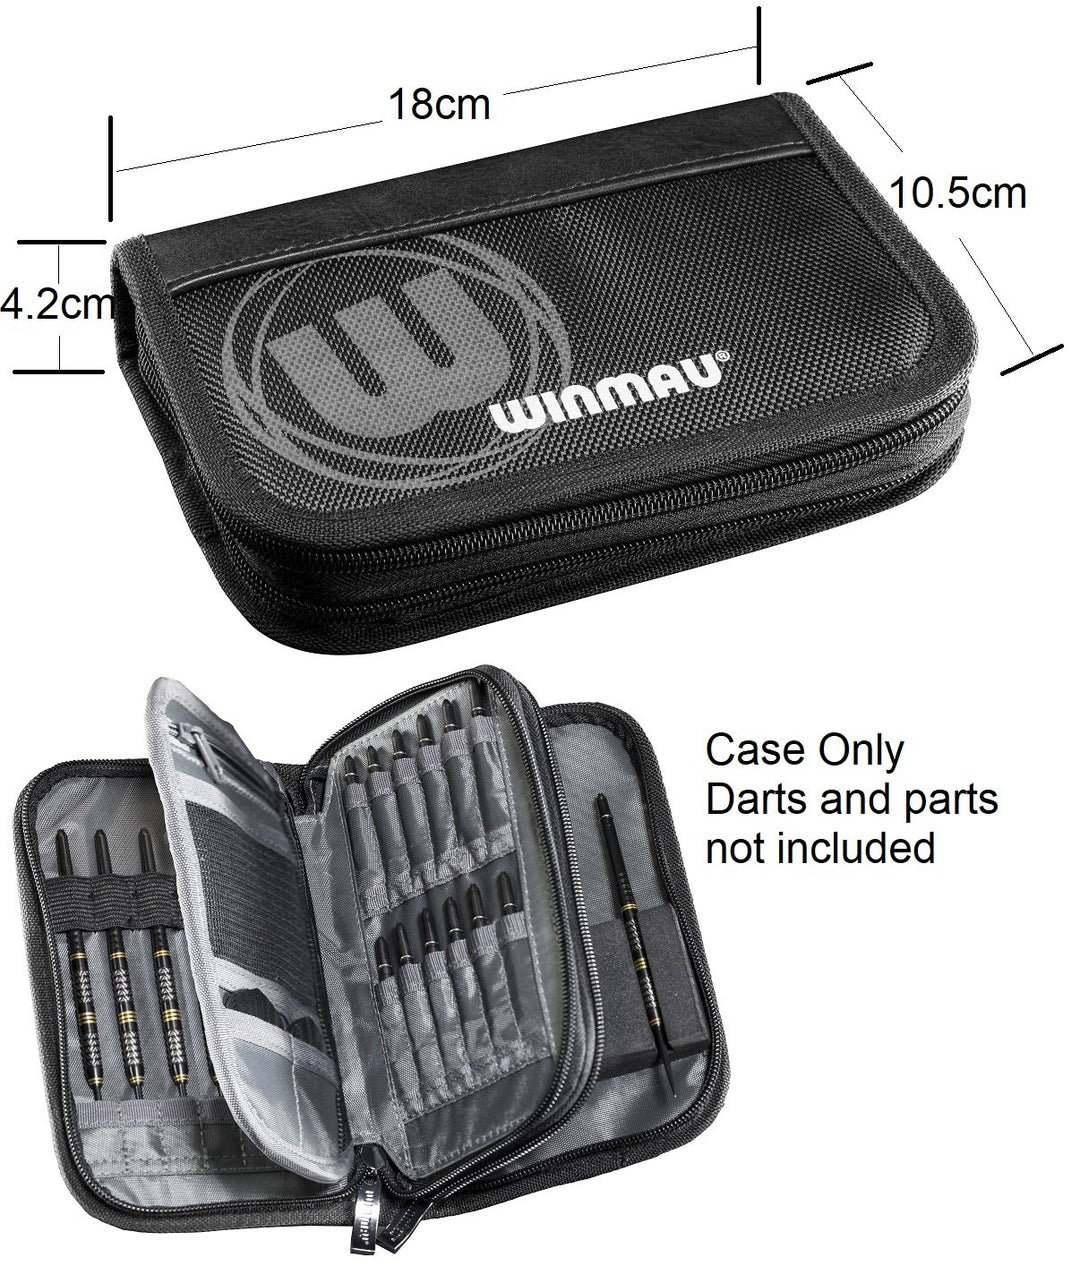 Winmau Urban X Large Darts and Accessory Case